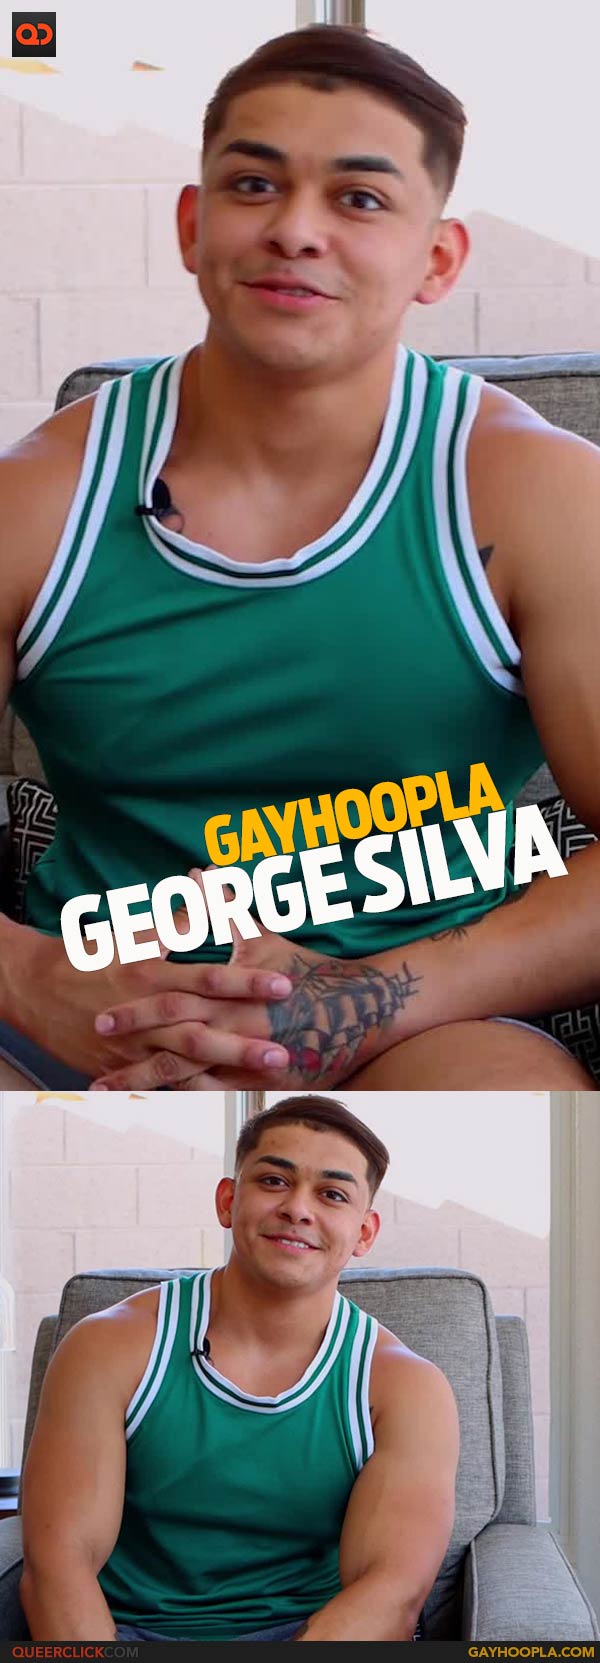 GayHoopla: Introducing George Silva